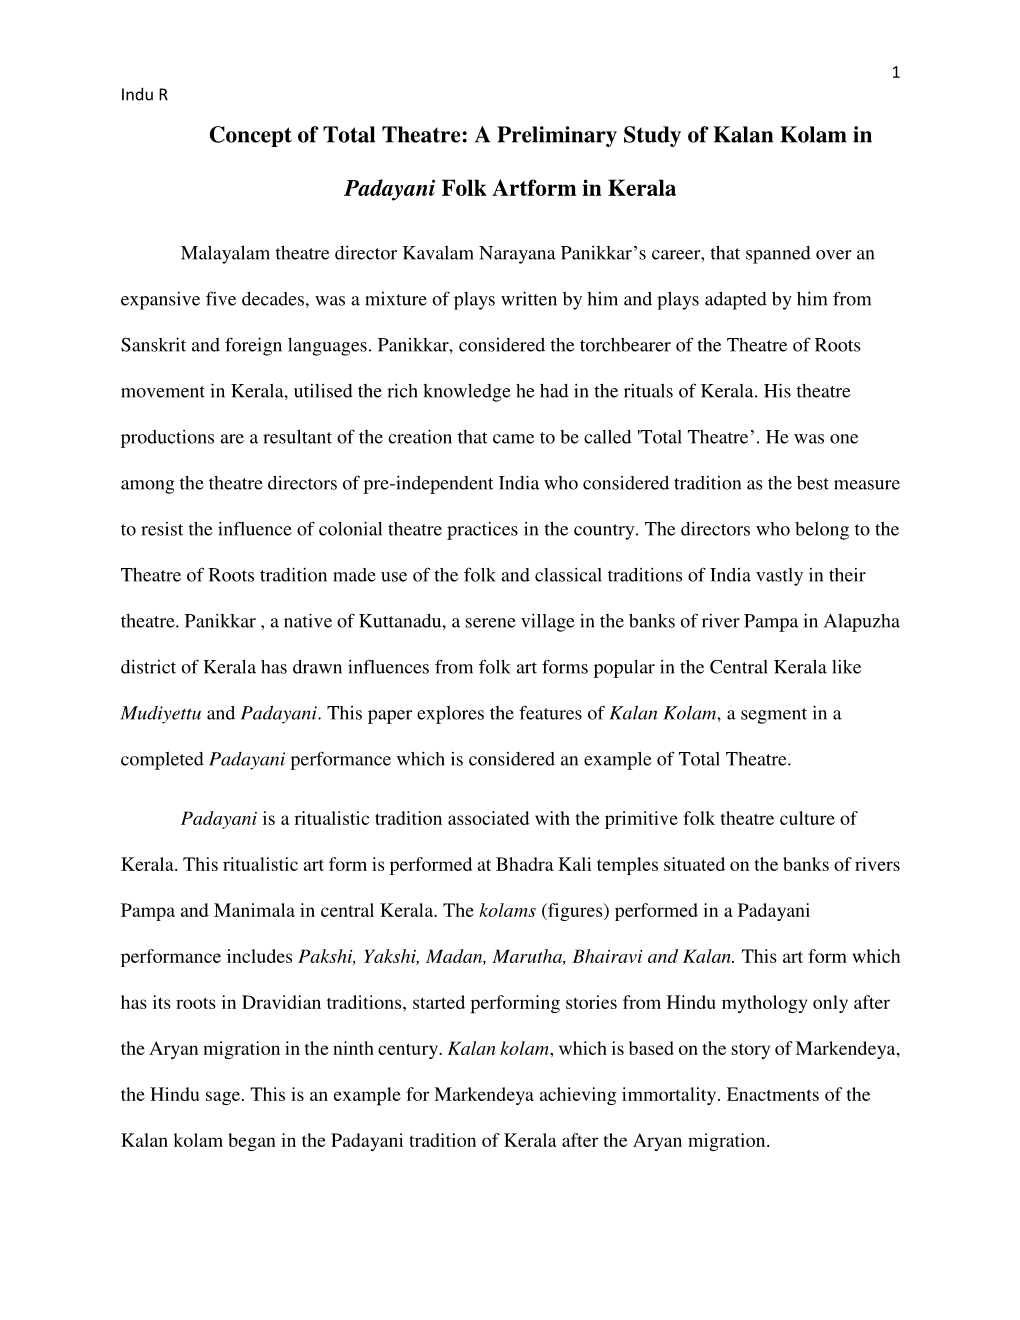 A Preliminary Study of Kalan Kolam in Padayani Folk Artform in Kerala